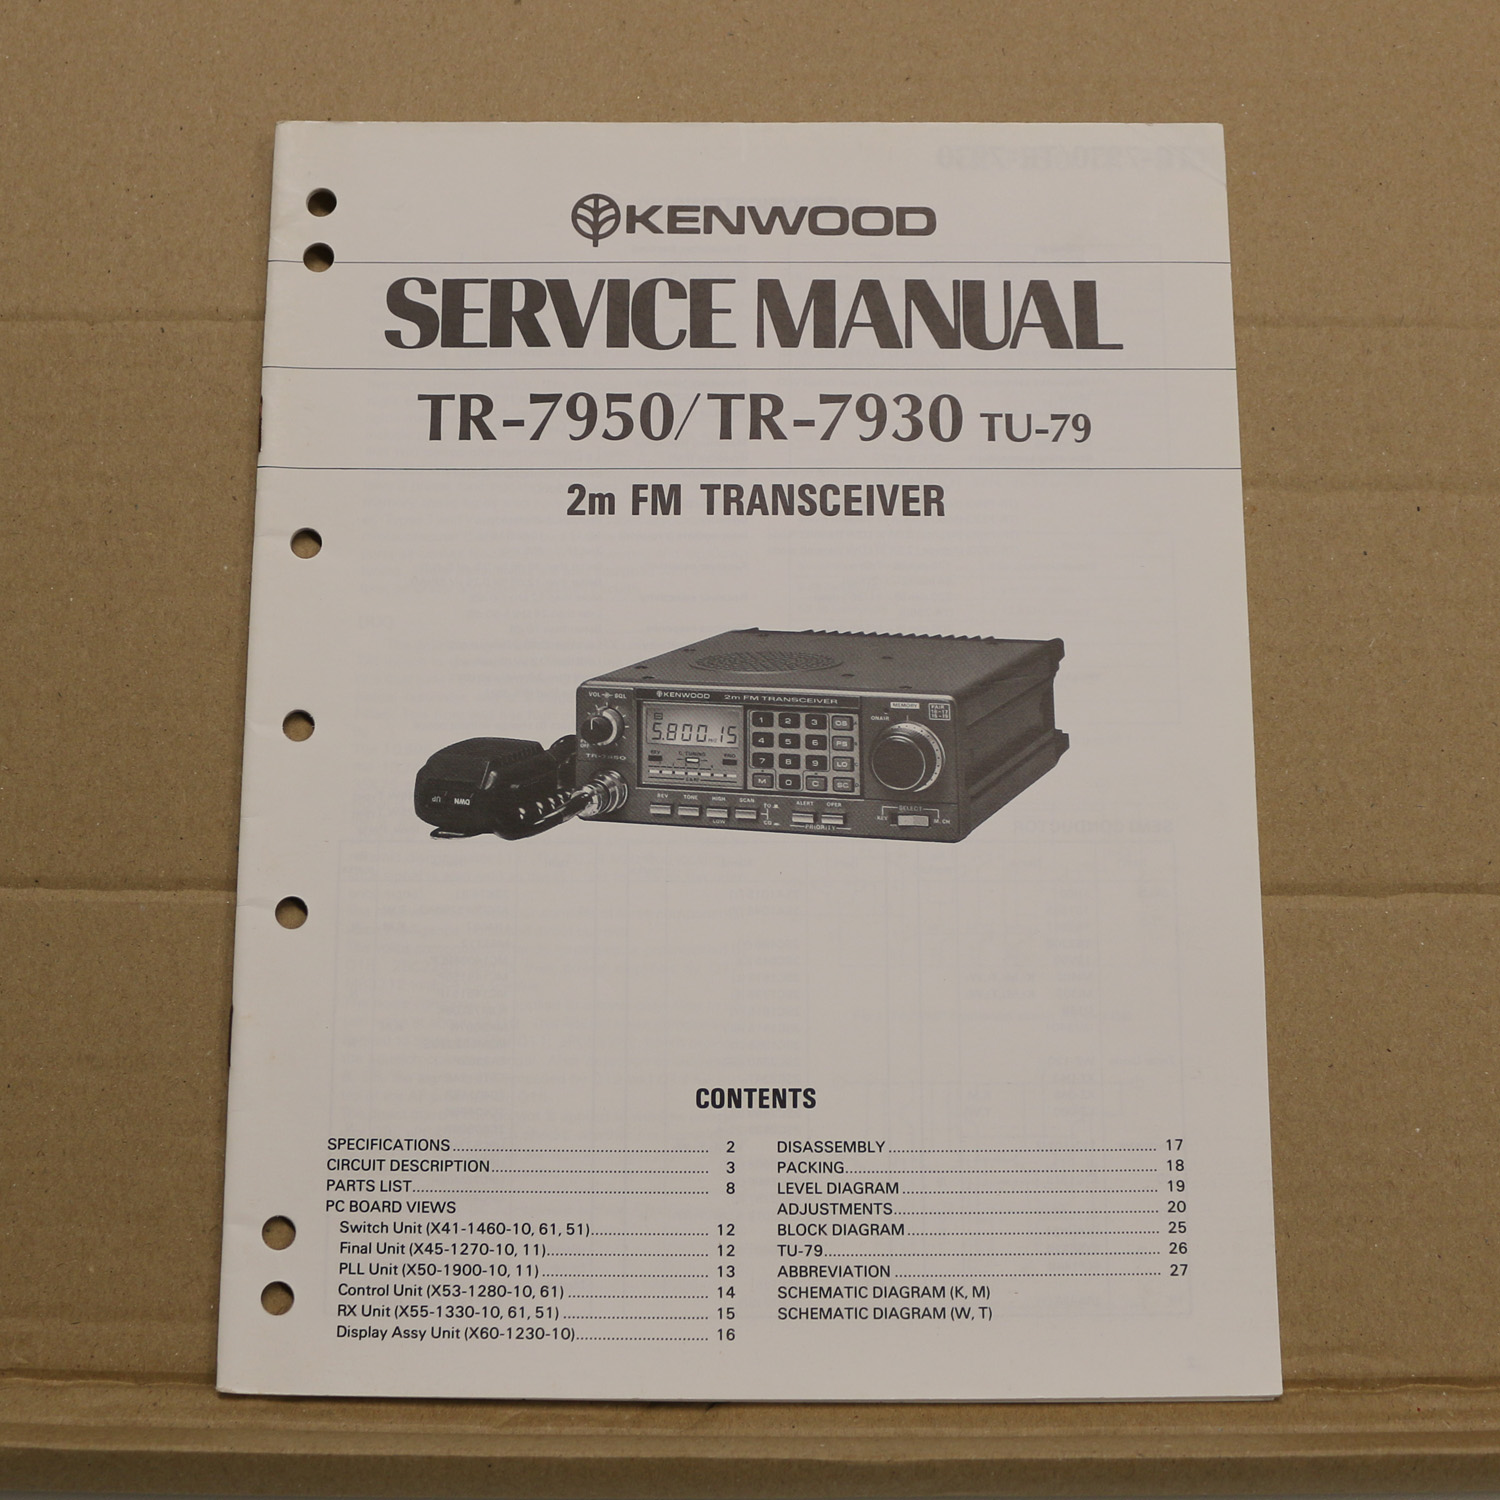 Kenwood TR-7950/TR-7930 Service Manual